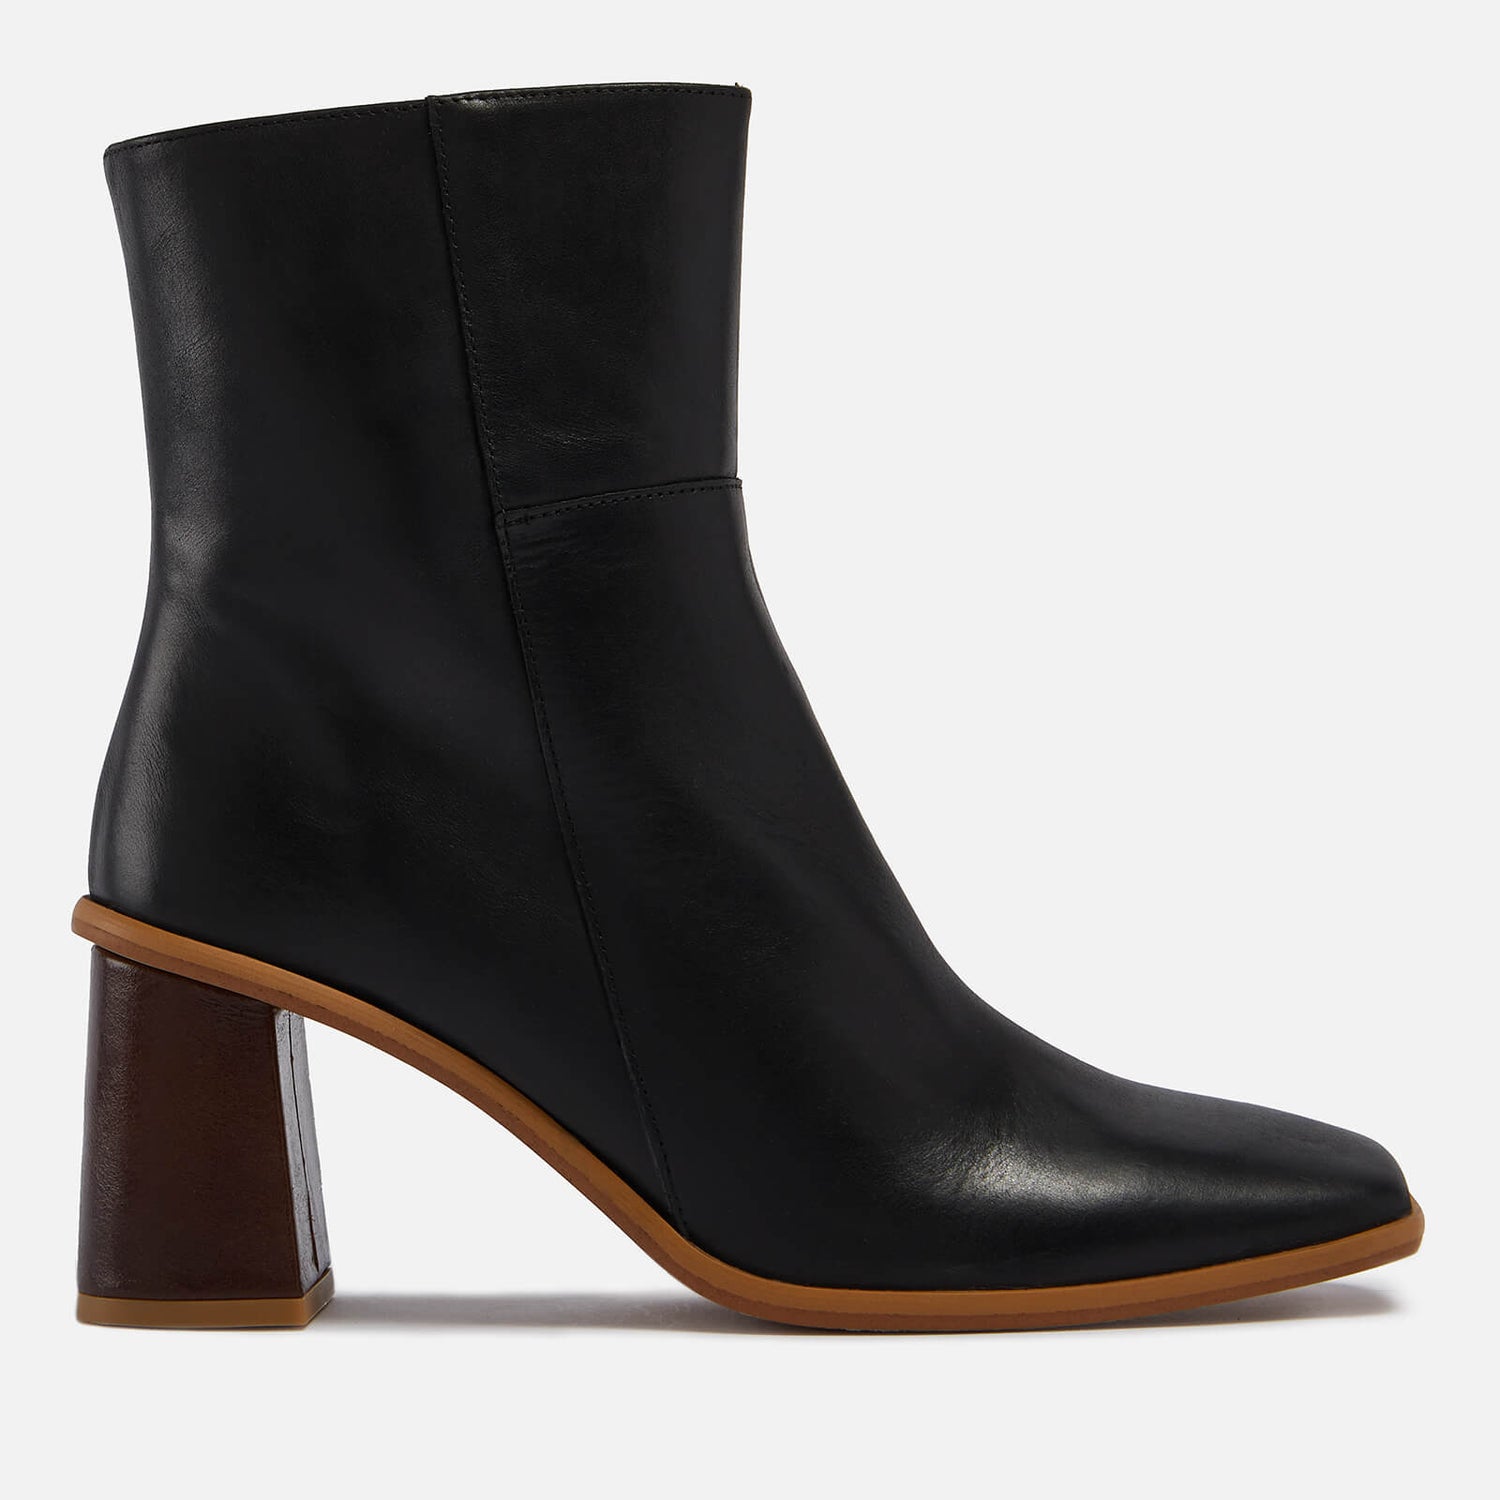 ALOHAS West Leather Heeled Ankle Boots - UK 7.5